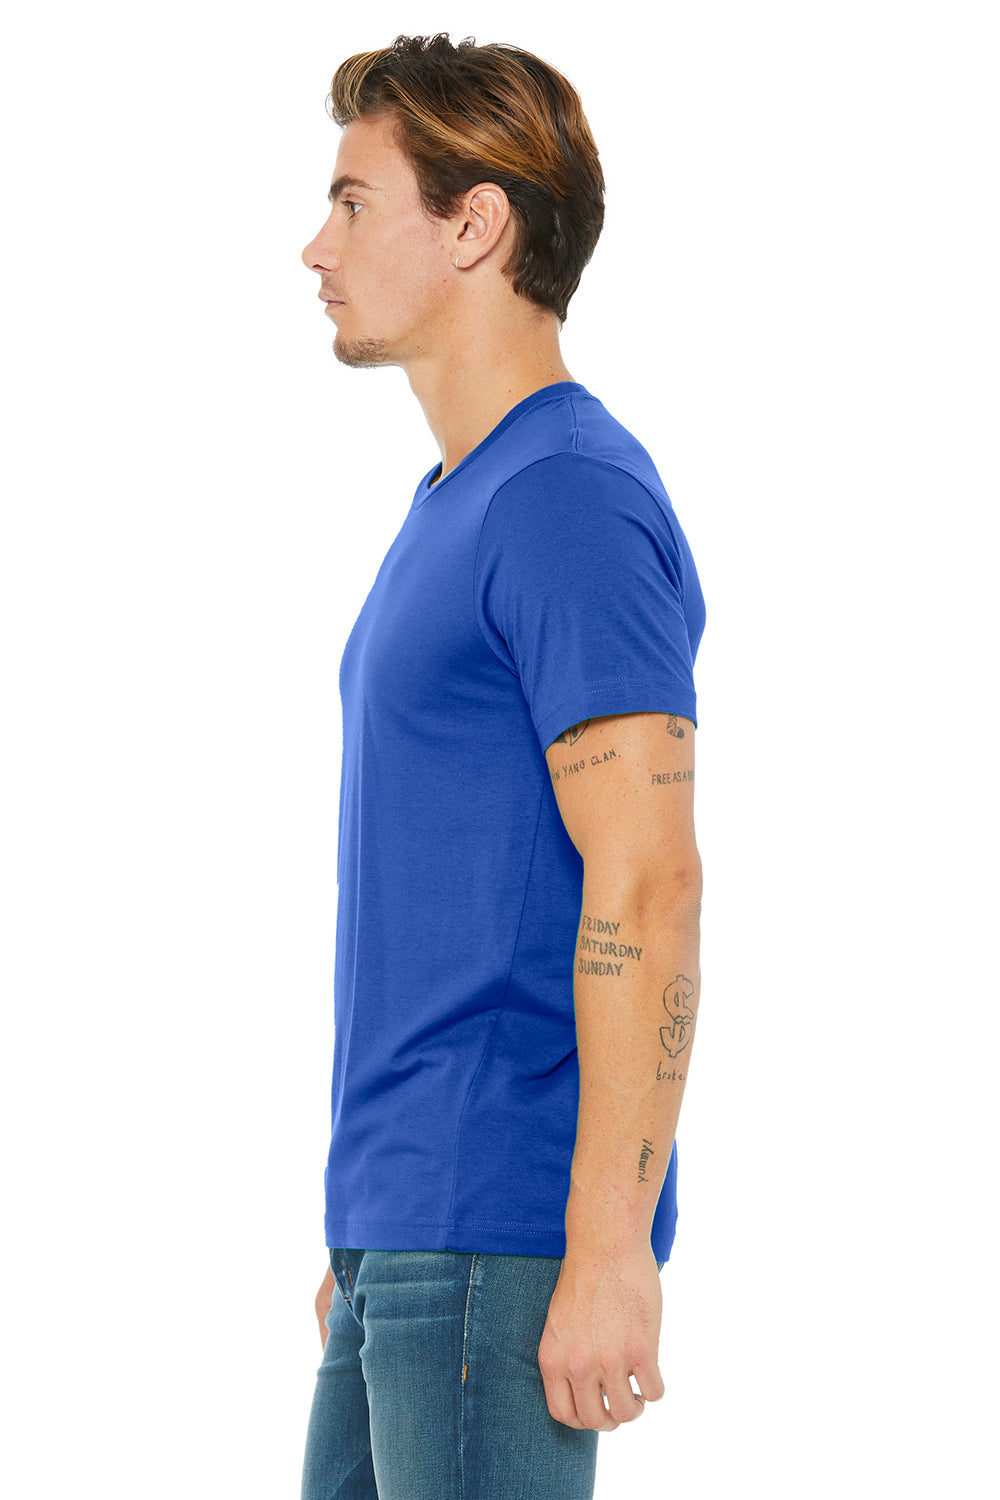 Bella + Canvas 3650 Mens Short Sleeve Crewneck T-Shirt Royal Blue Side